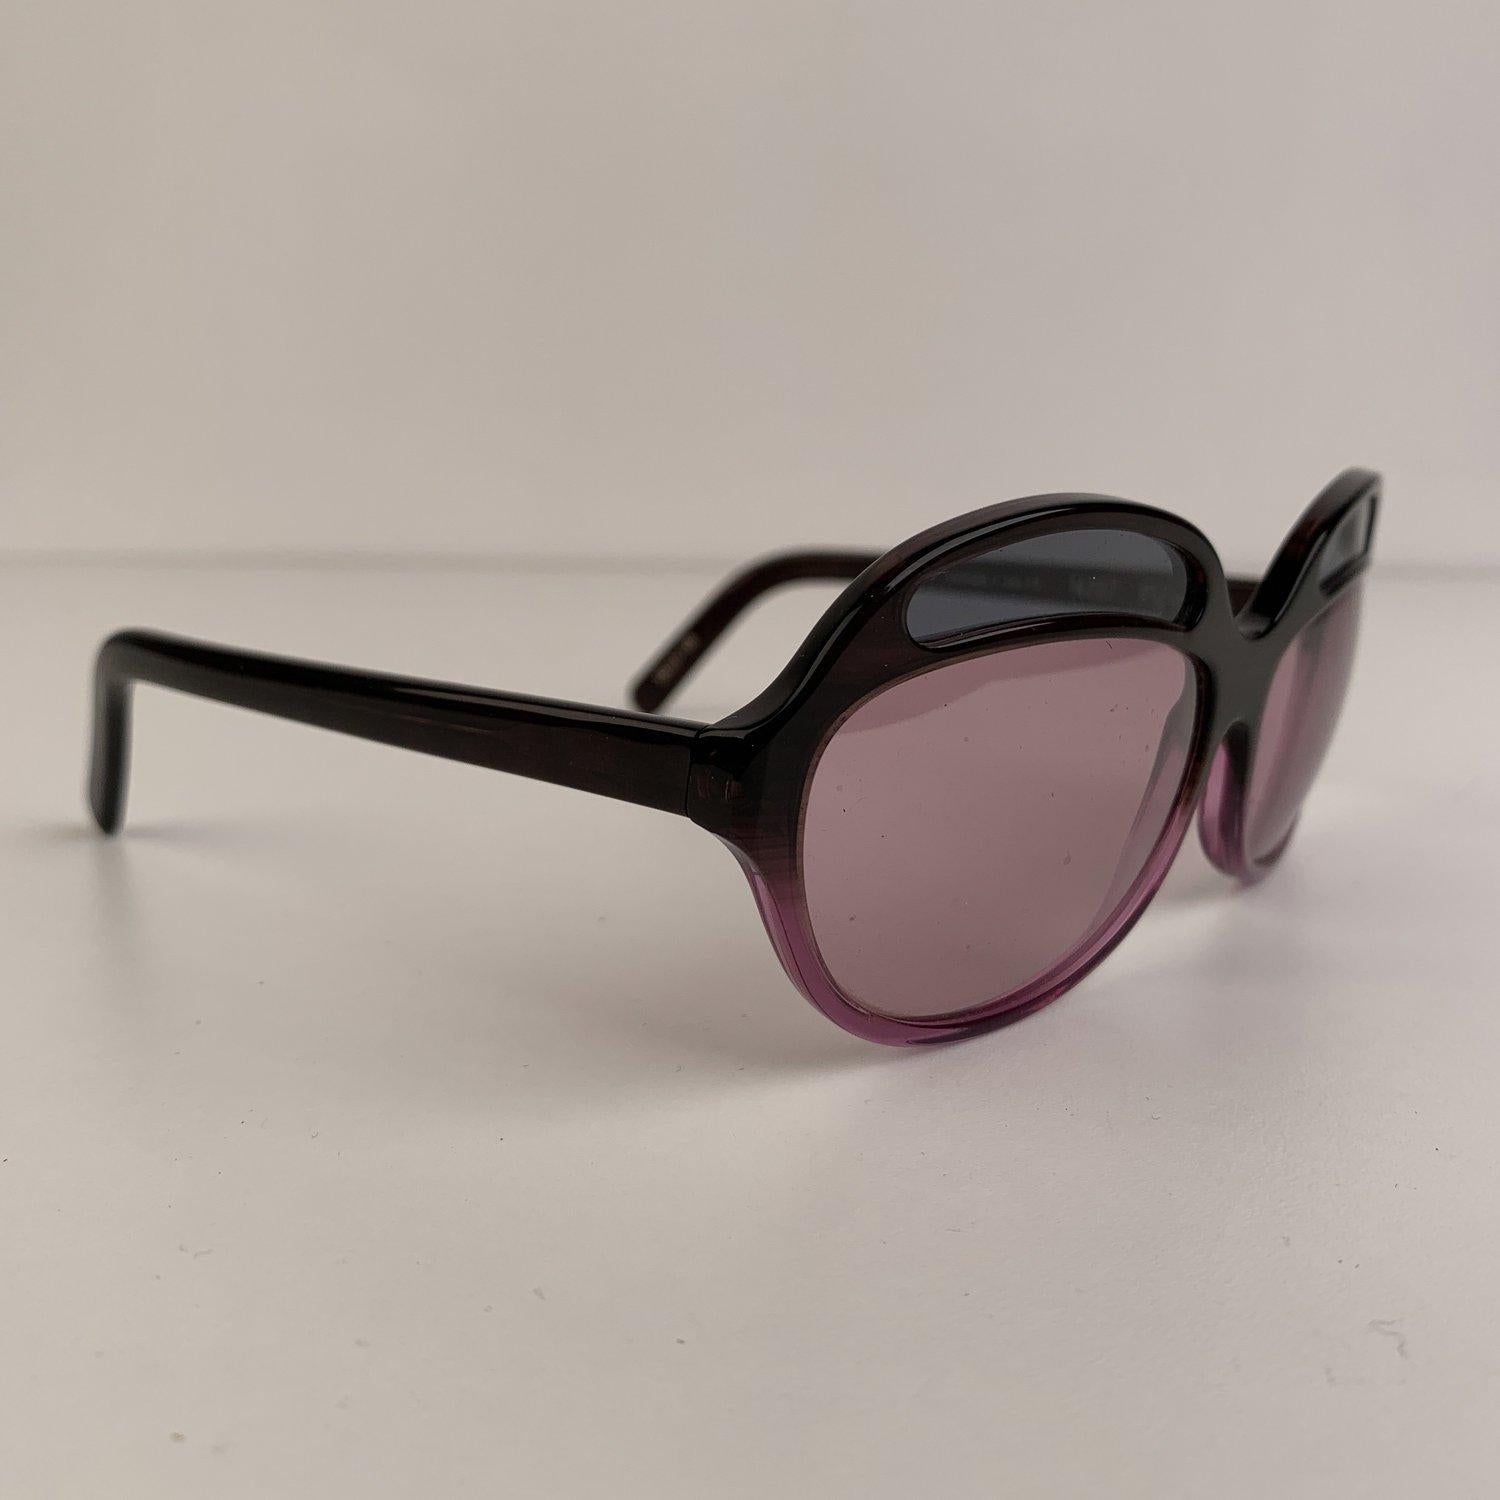 Marron Christian Roth - Lunettes de soleil vintage violettes Mod 14207 Bug Eye 59/14 en vente